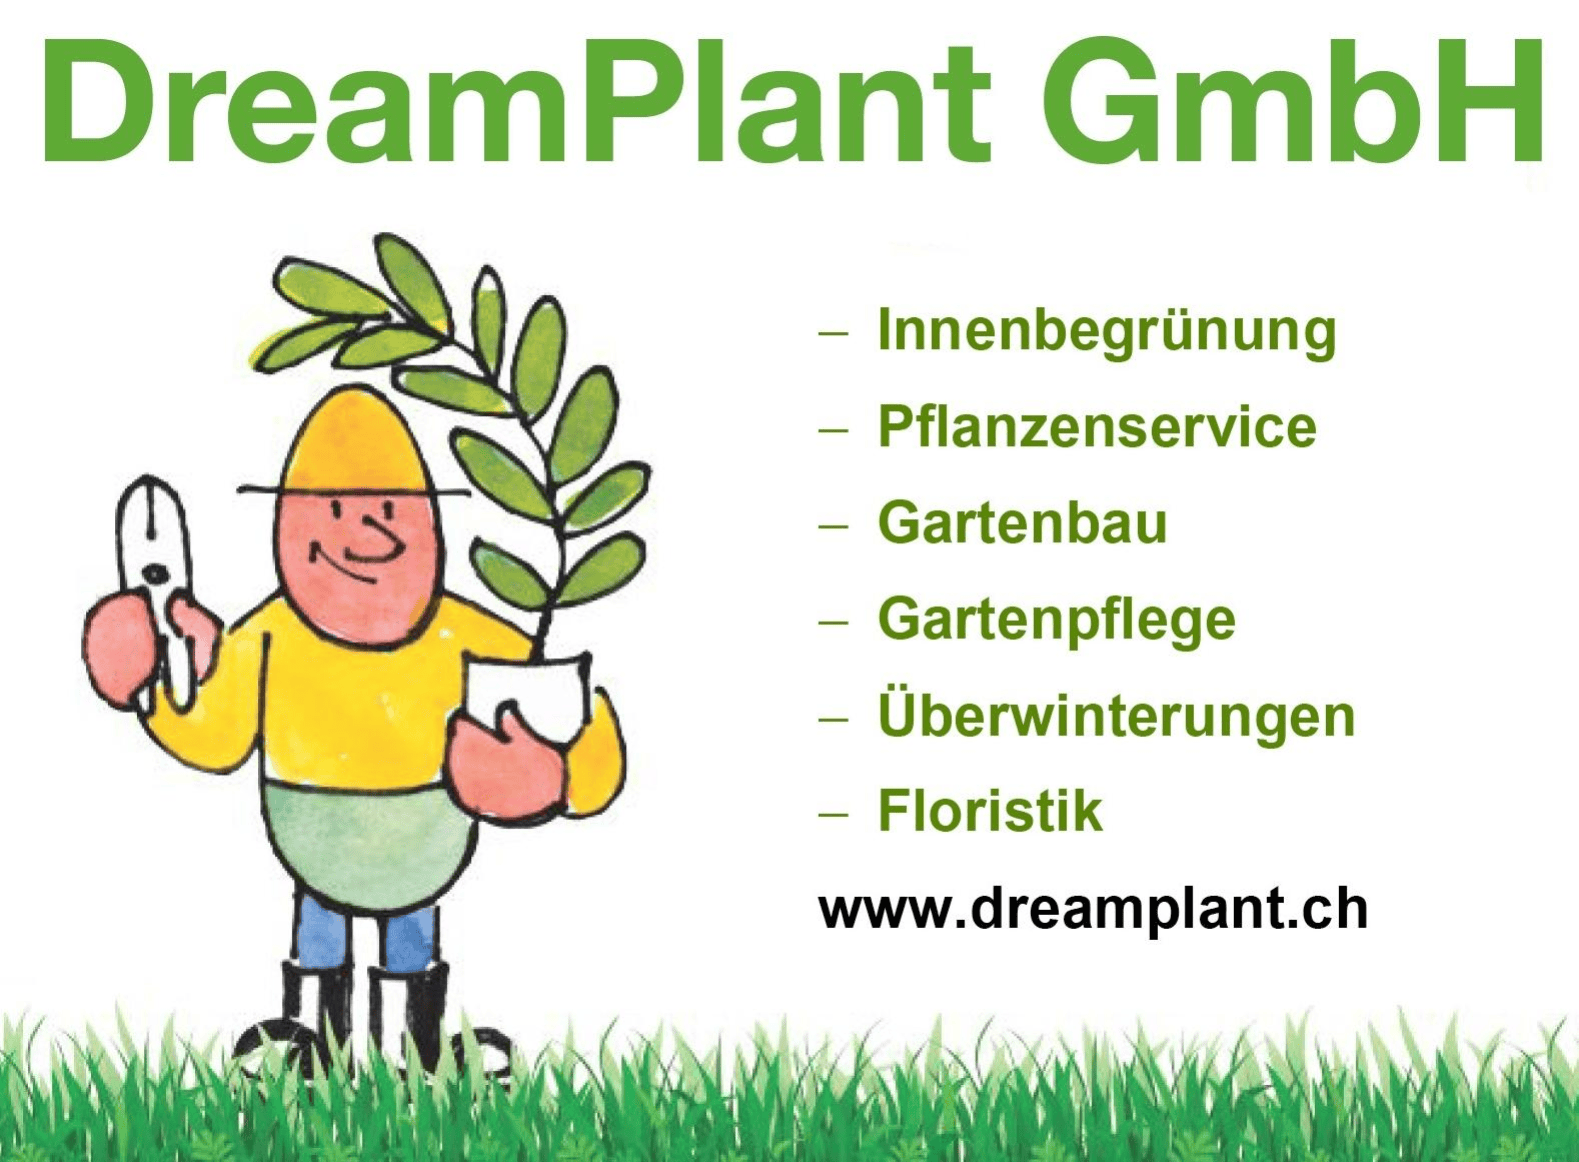 DreamPlant GmbH